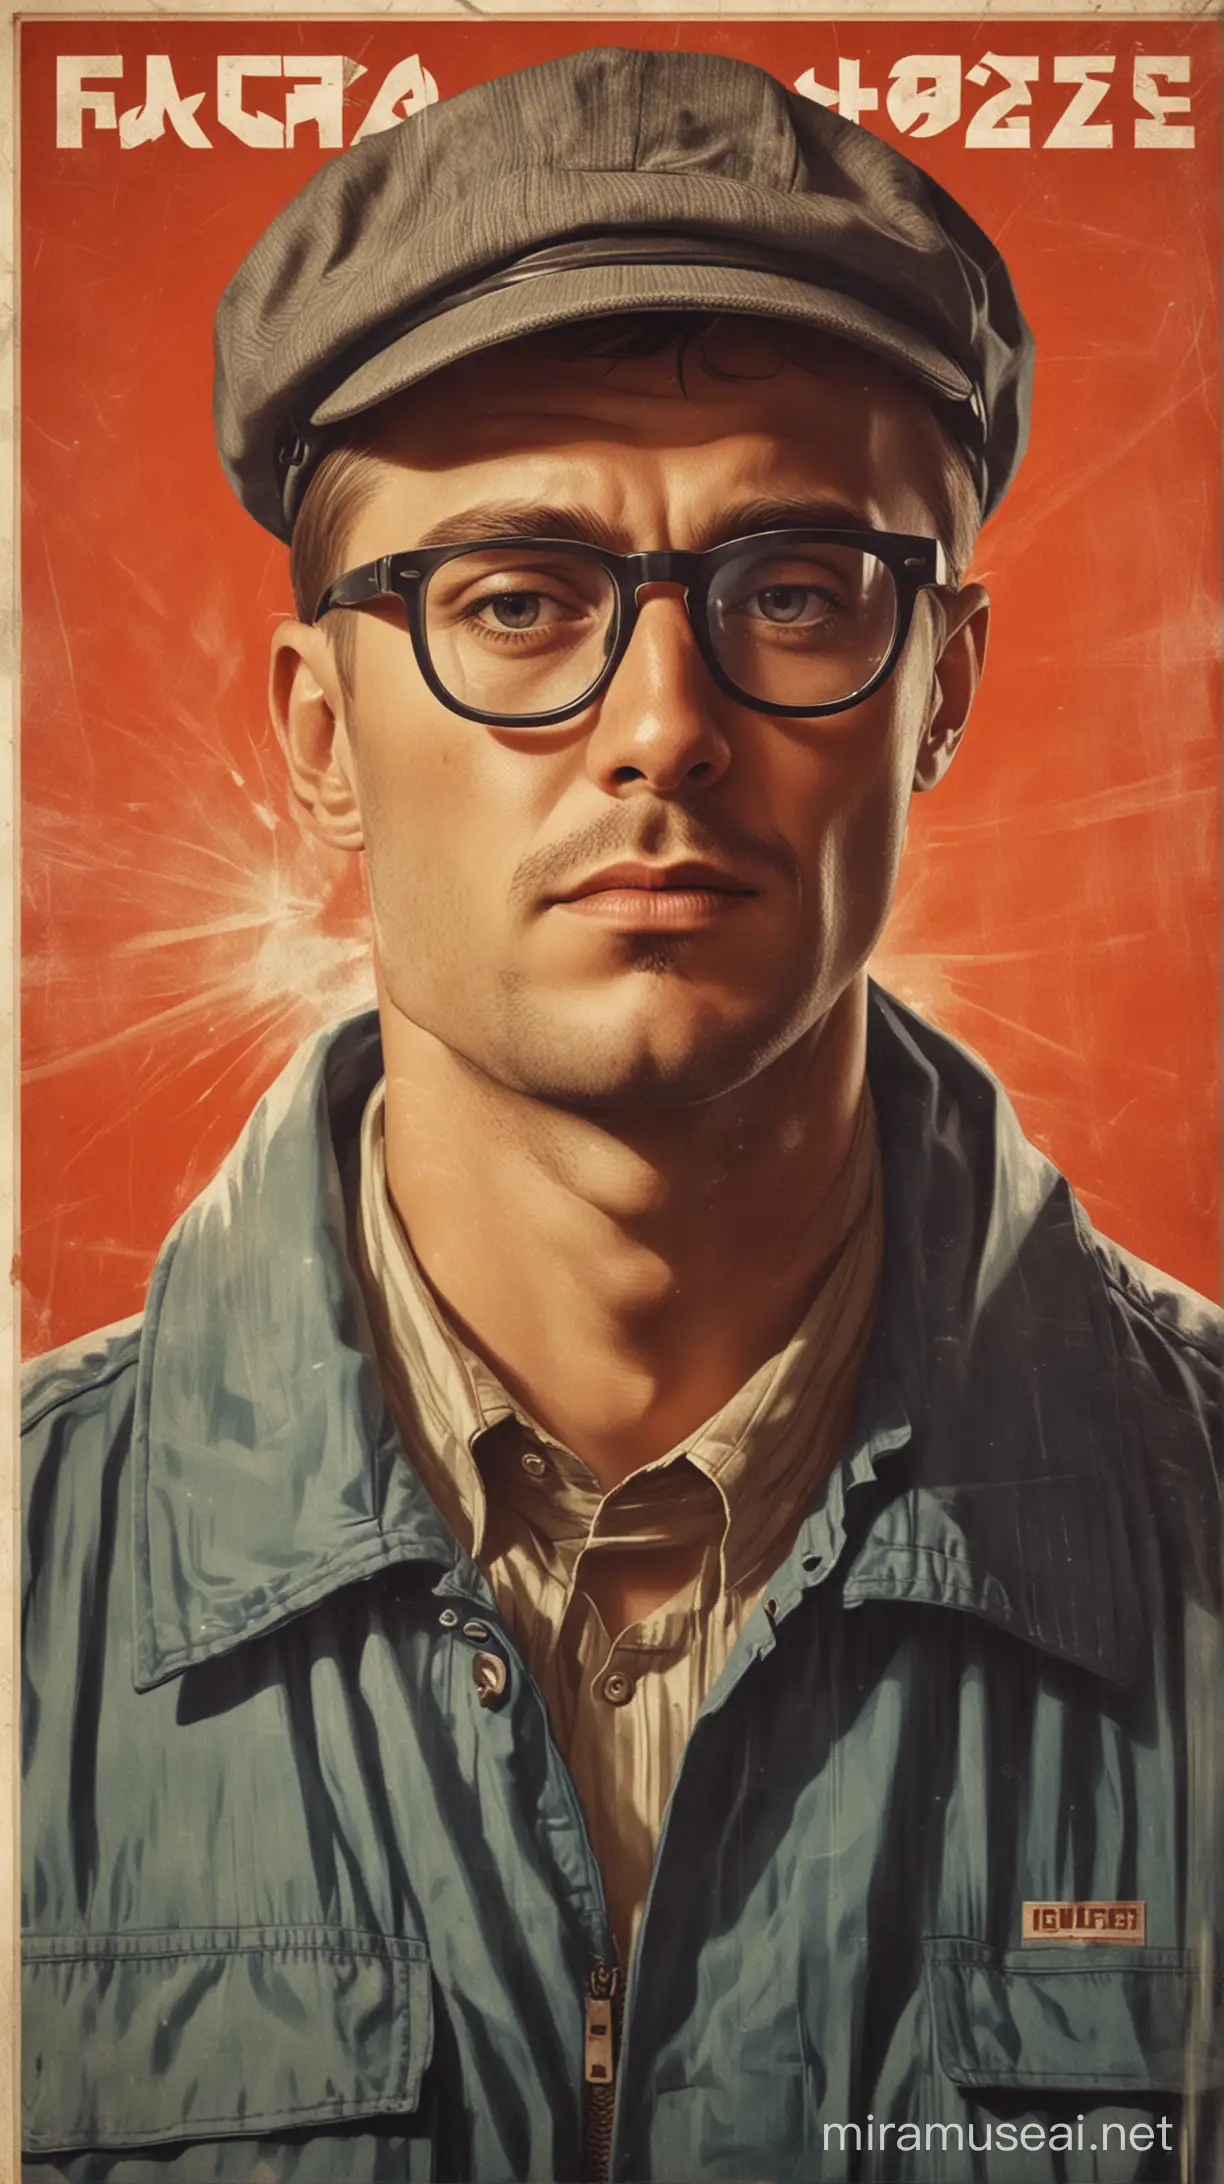 Soviet Retro Poster Portrait of Working Class Man Seeking Hope and Freedom in HiTech Cyberpunk Environment